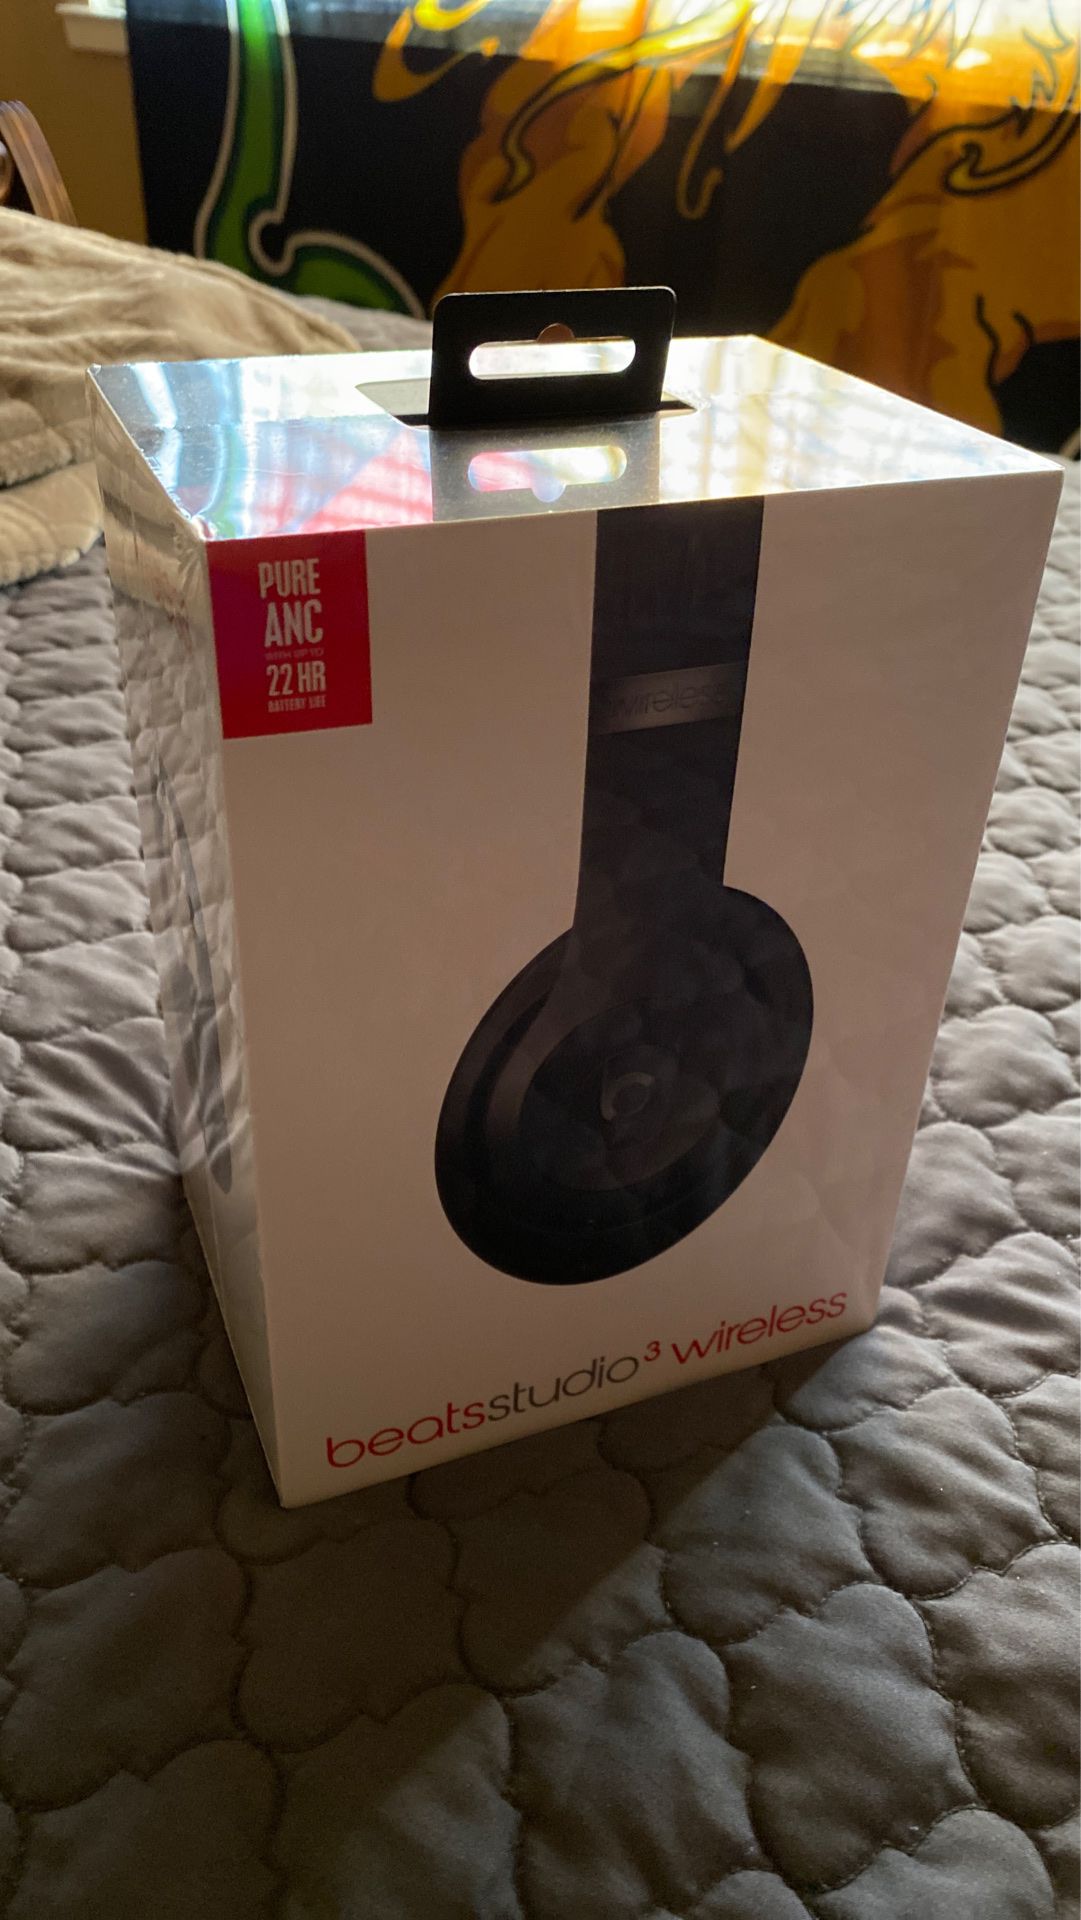 Beats Studio 3 Wireless - New in box Sealed